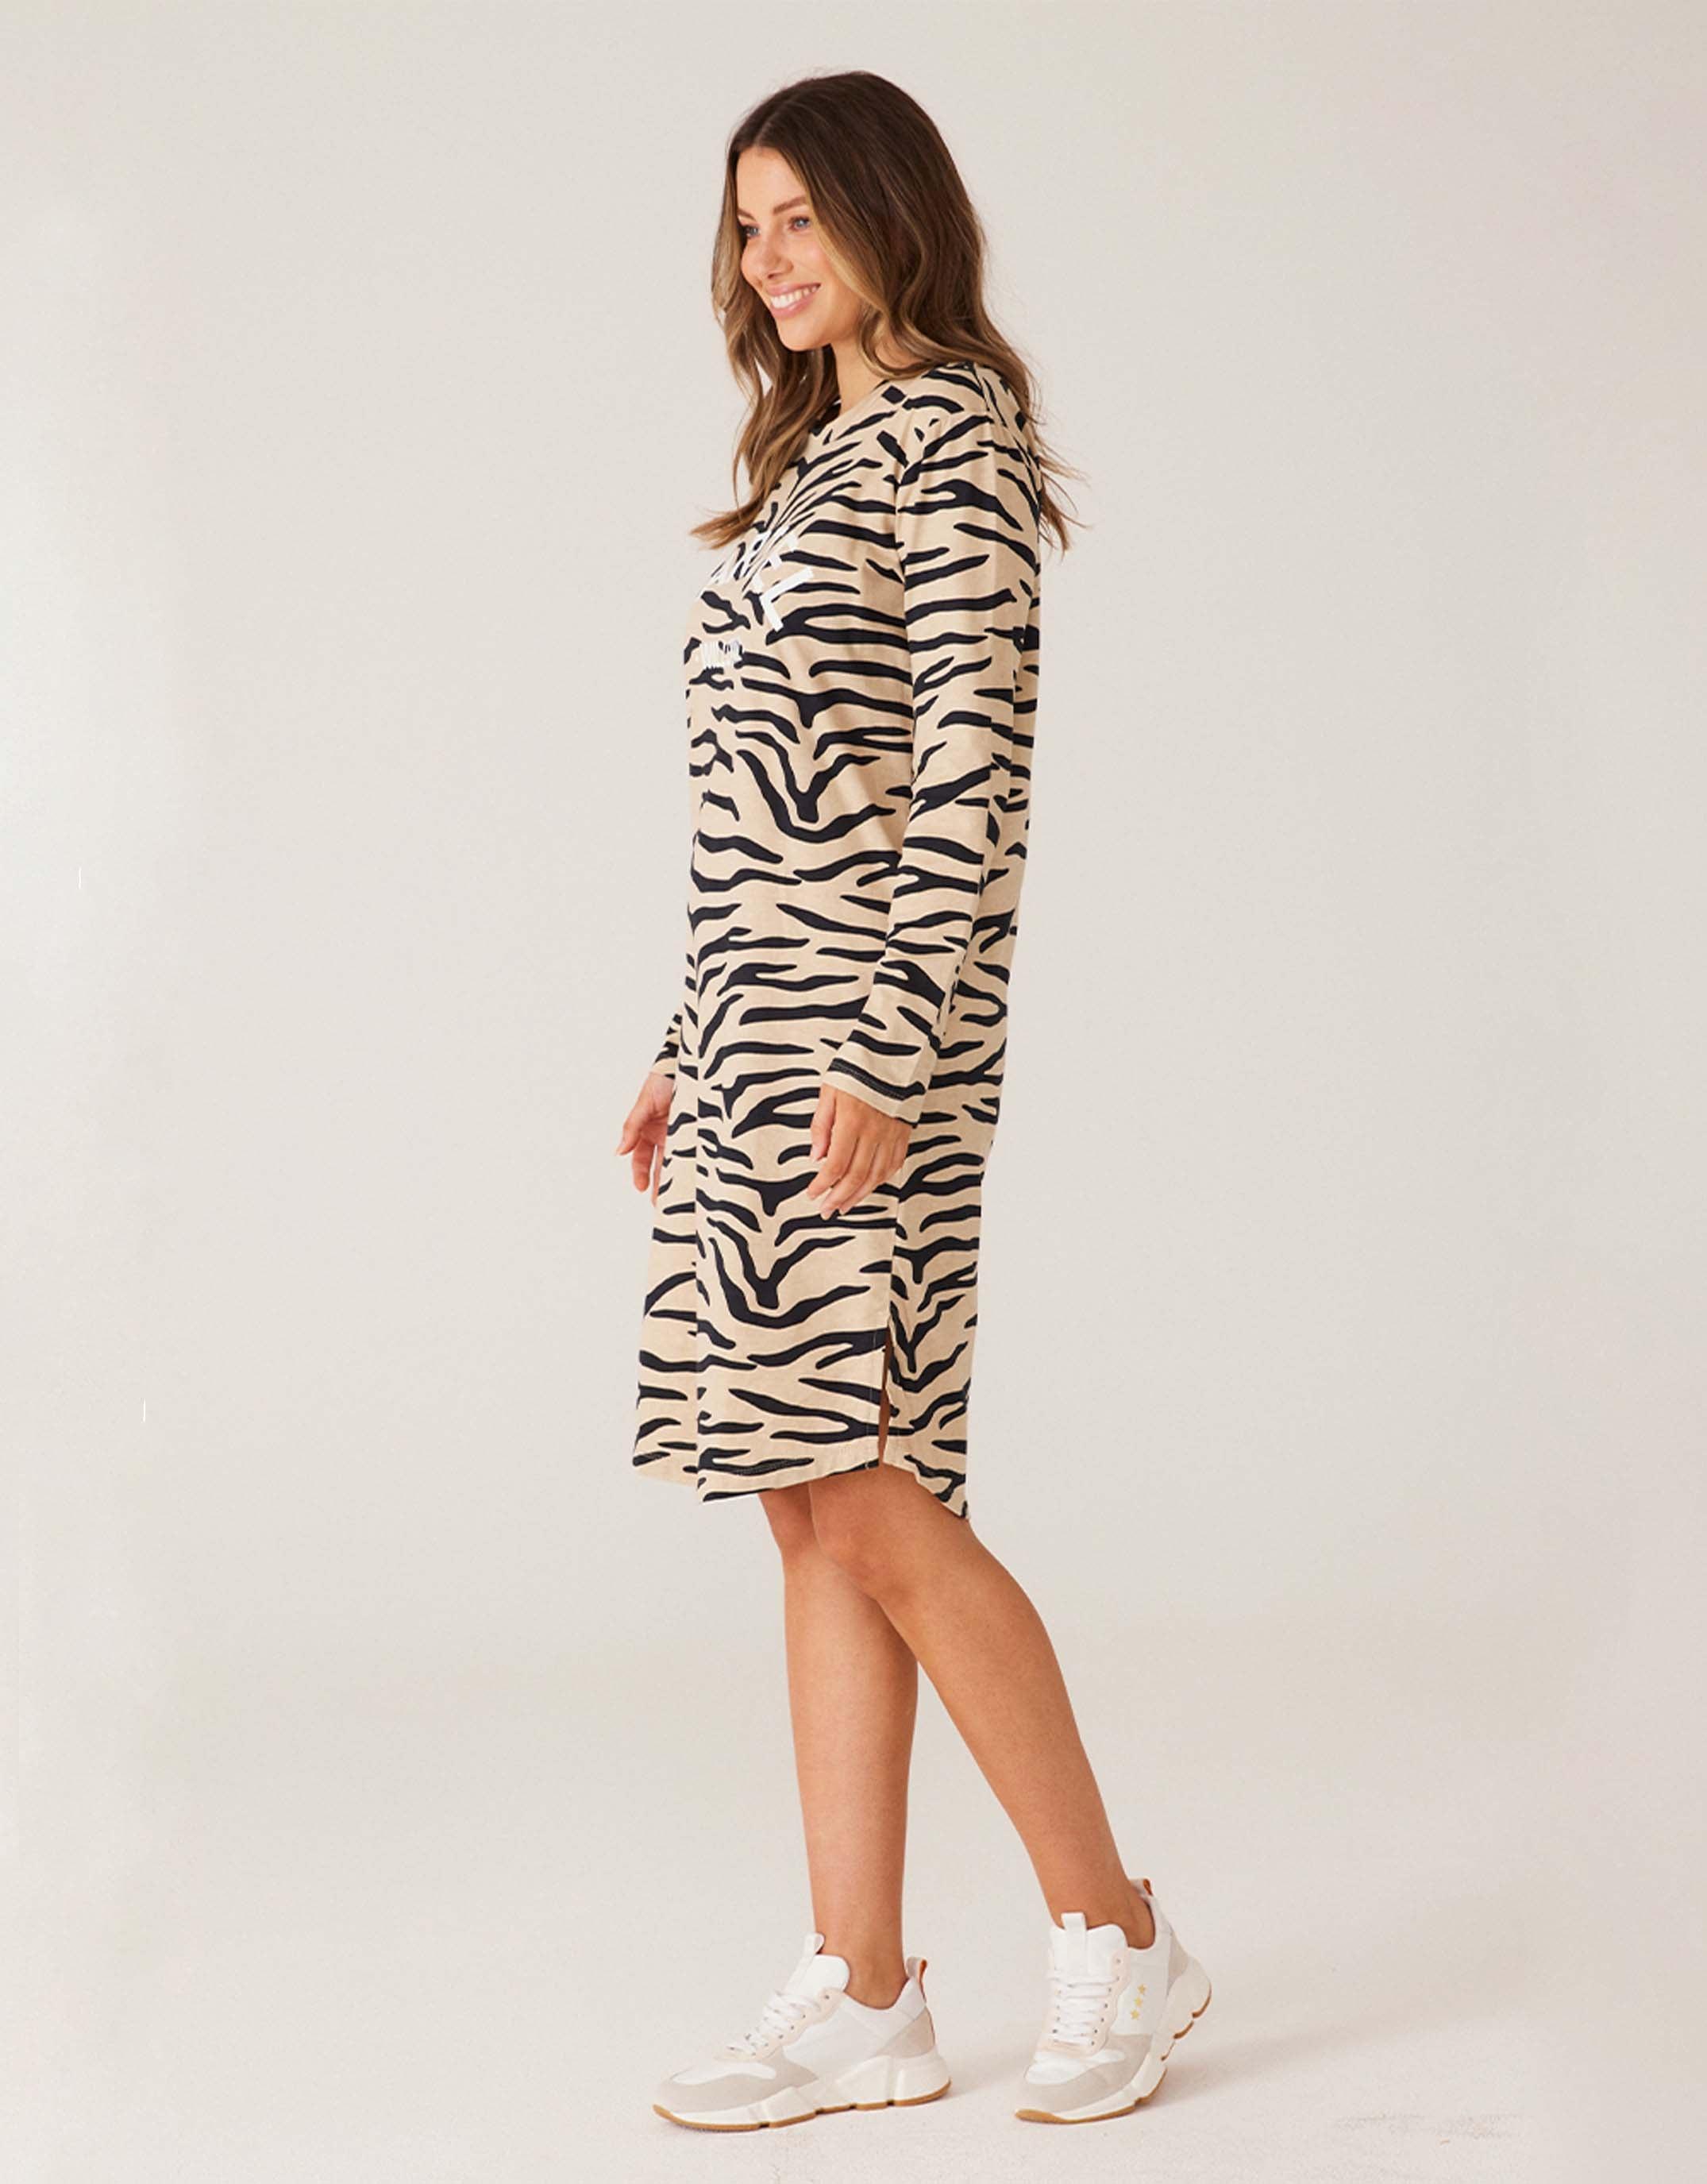 Alexis Long Sleeve Dress - Taupe Zebra - paulaglazebrook